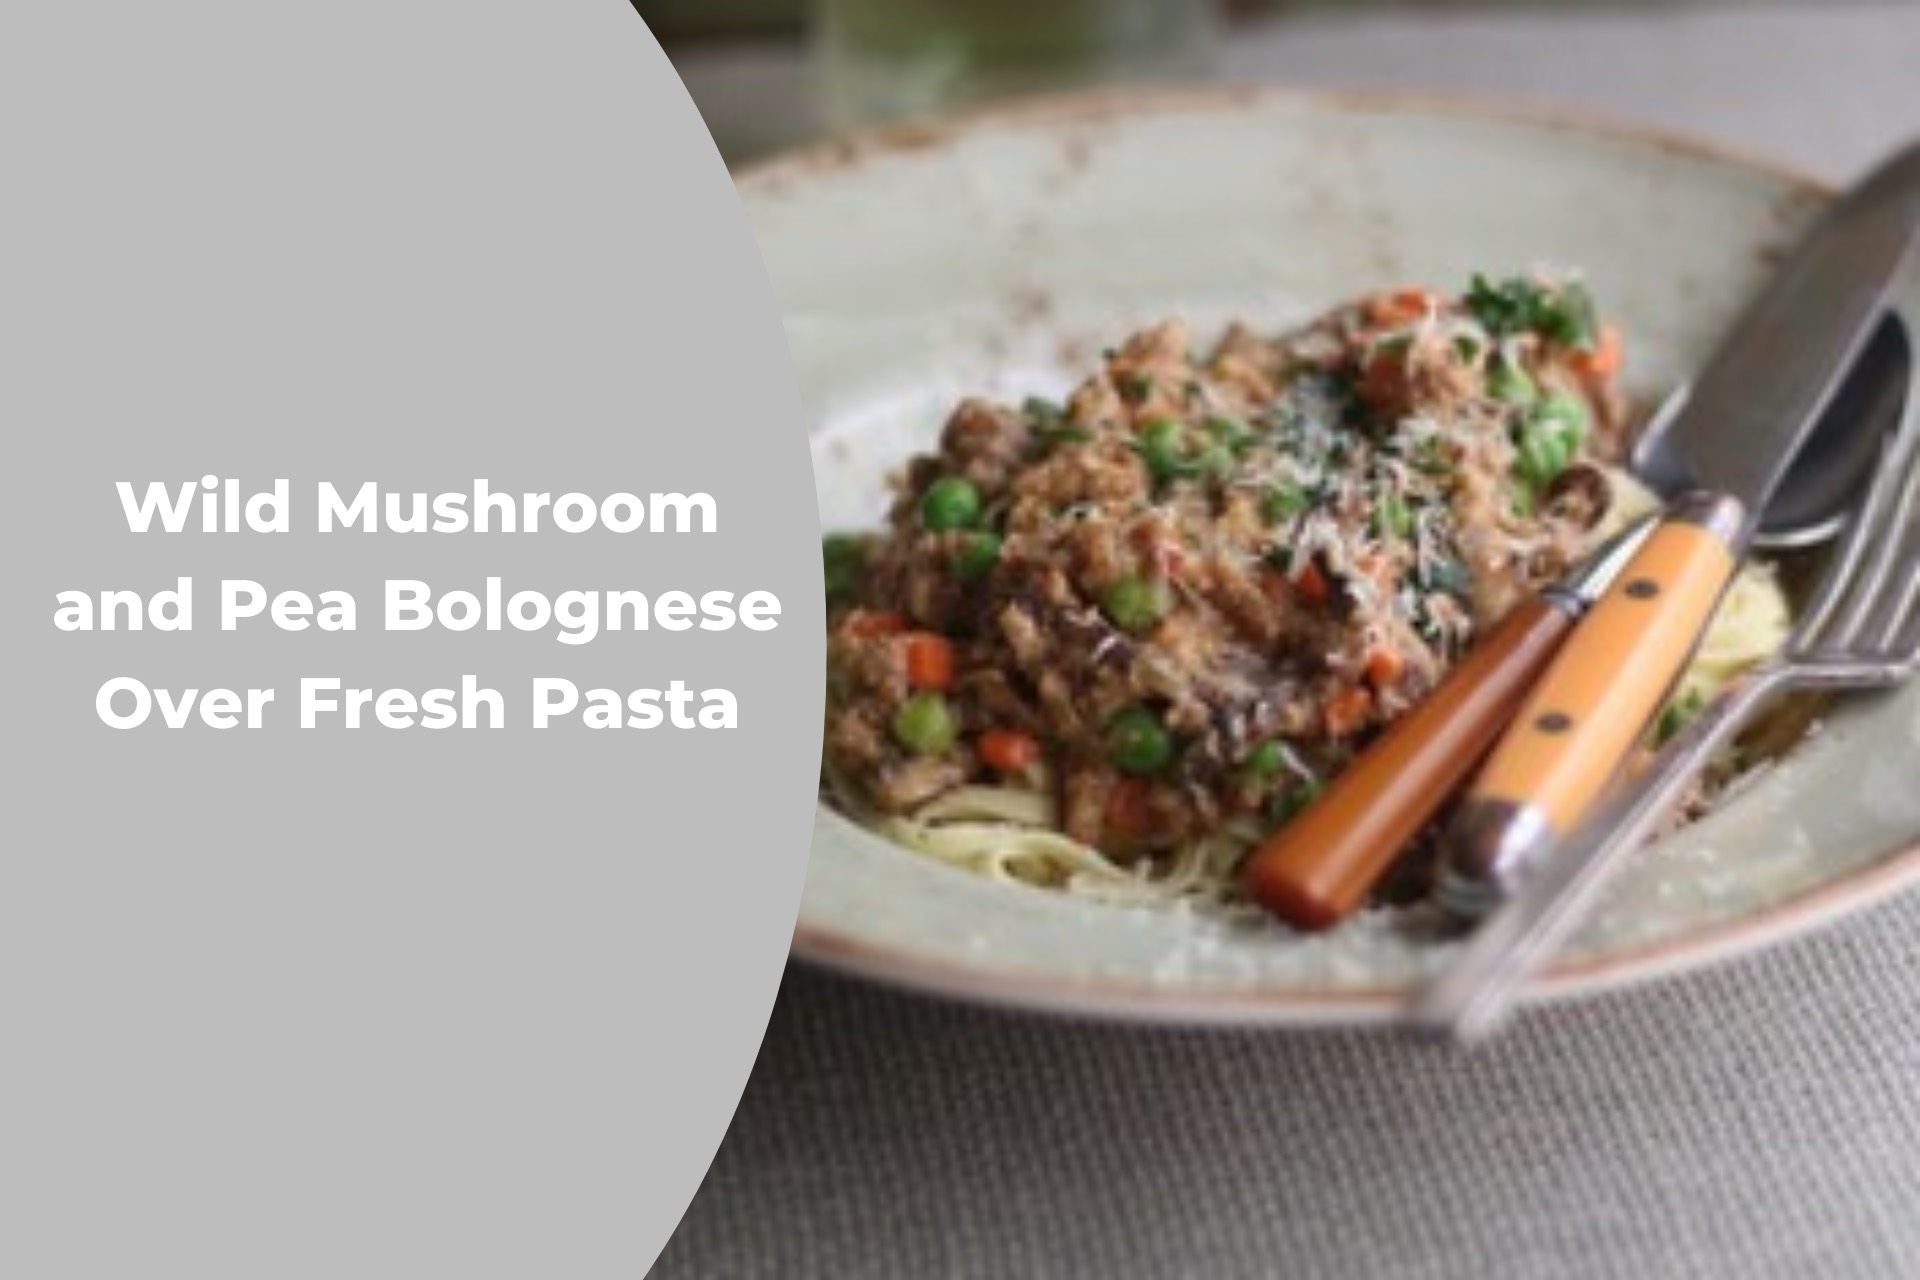 Wild Mushroom and Pea Bolognese over Fresh Pasta